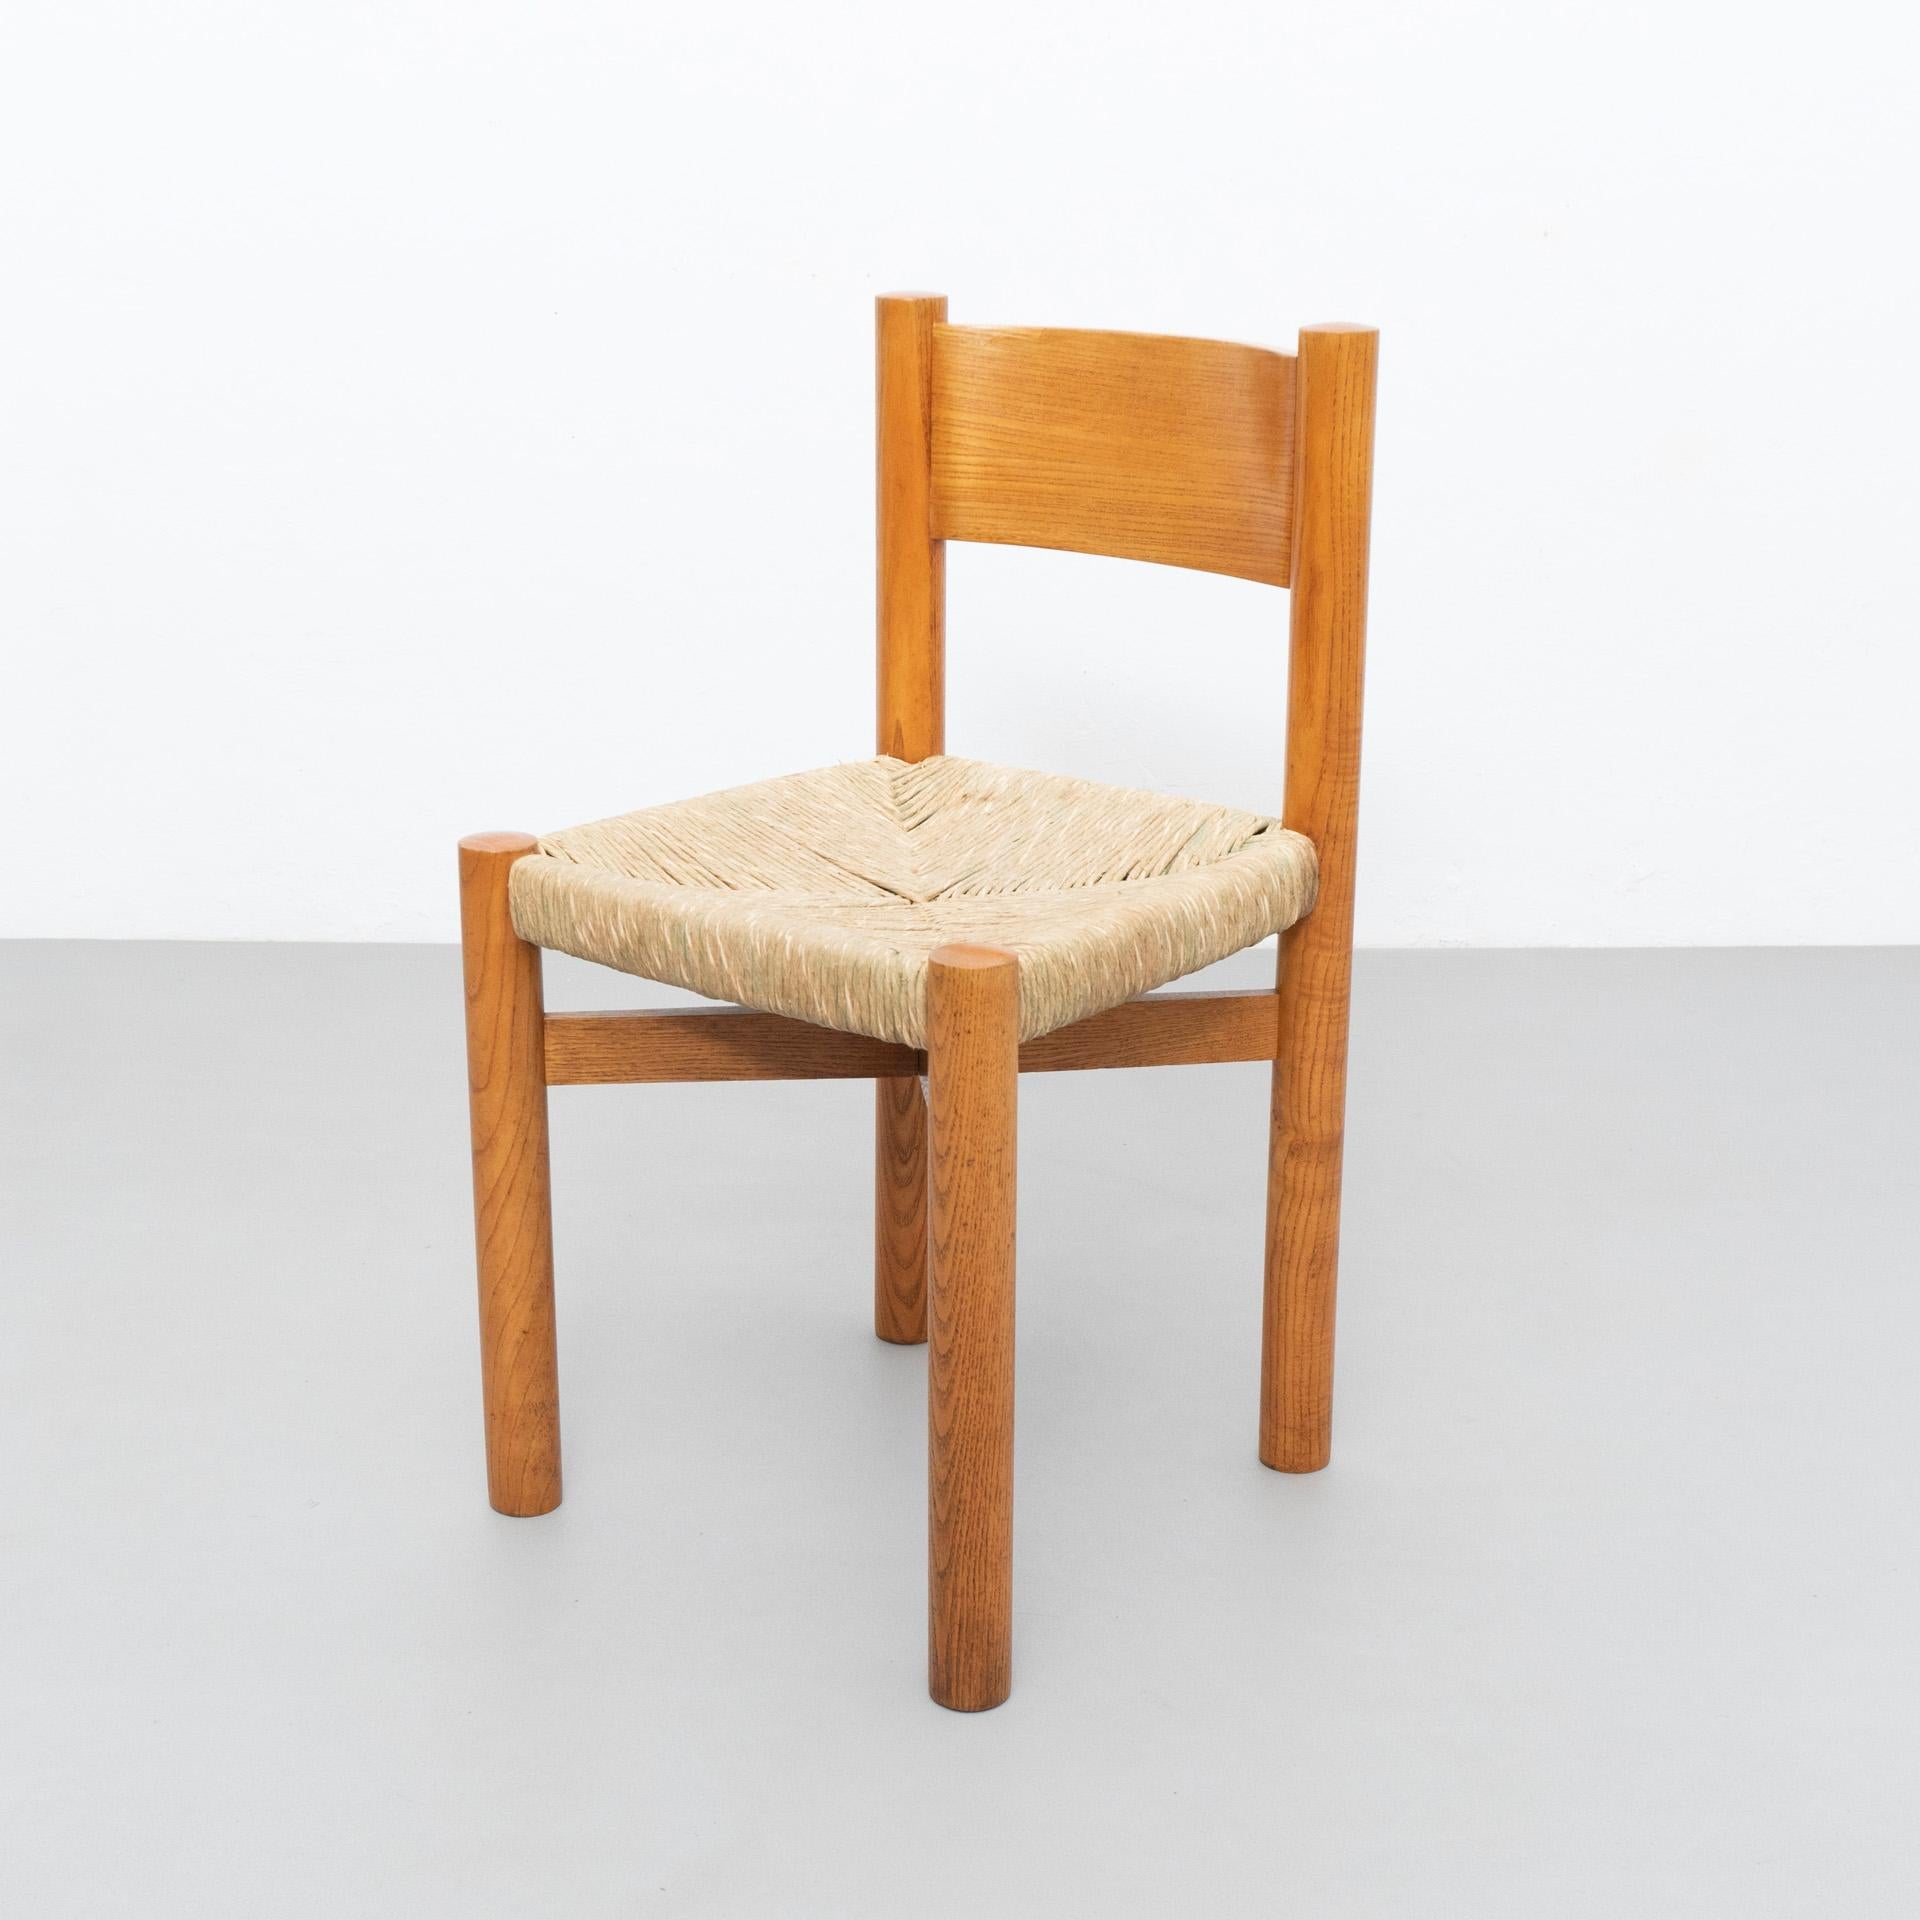 Rattan Charlotte Perriand Meribel Chair, circa 1950